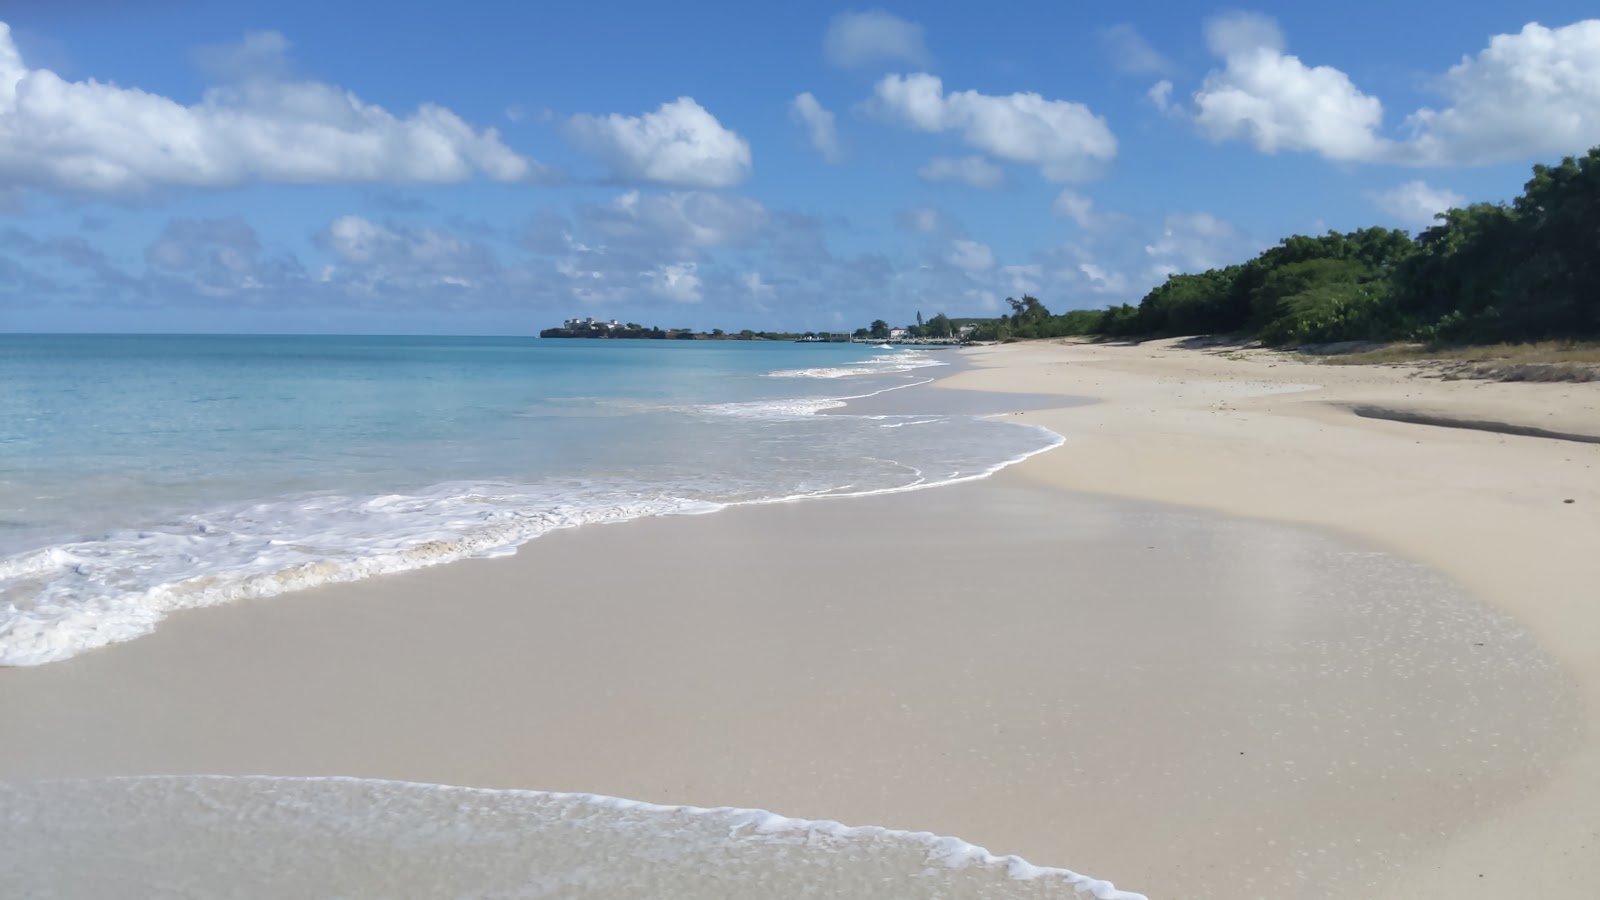 Fotografie cu Runaway beach - locul popular printre cunoscătorii de relaxare